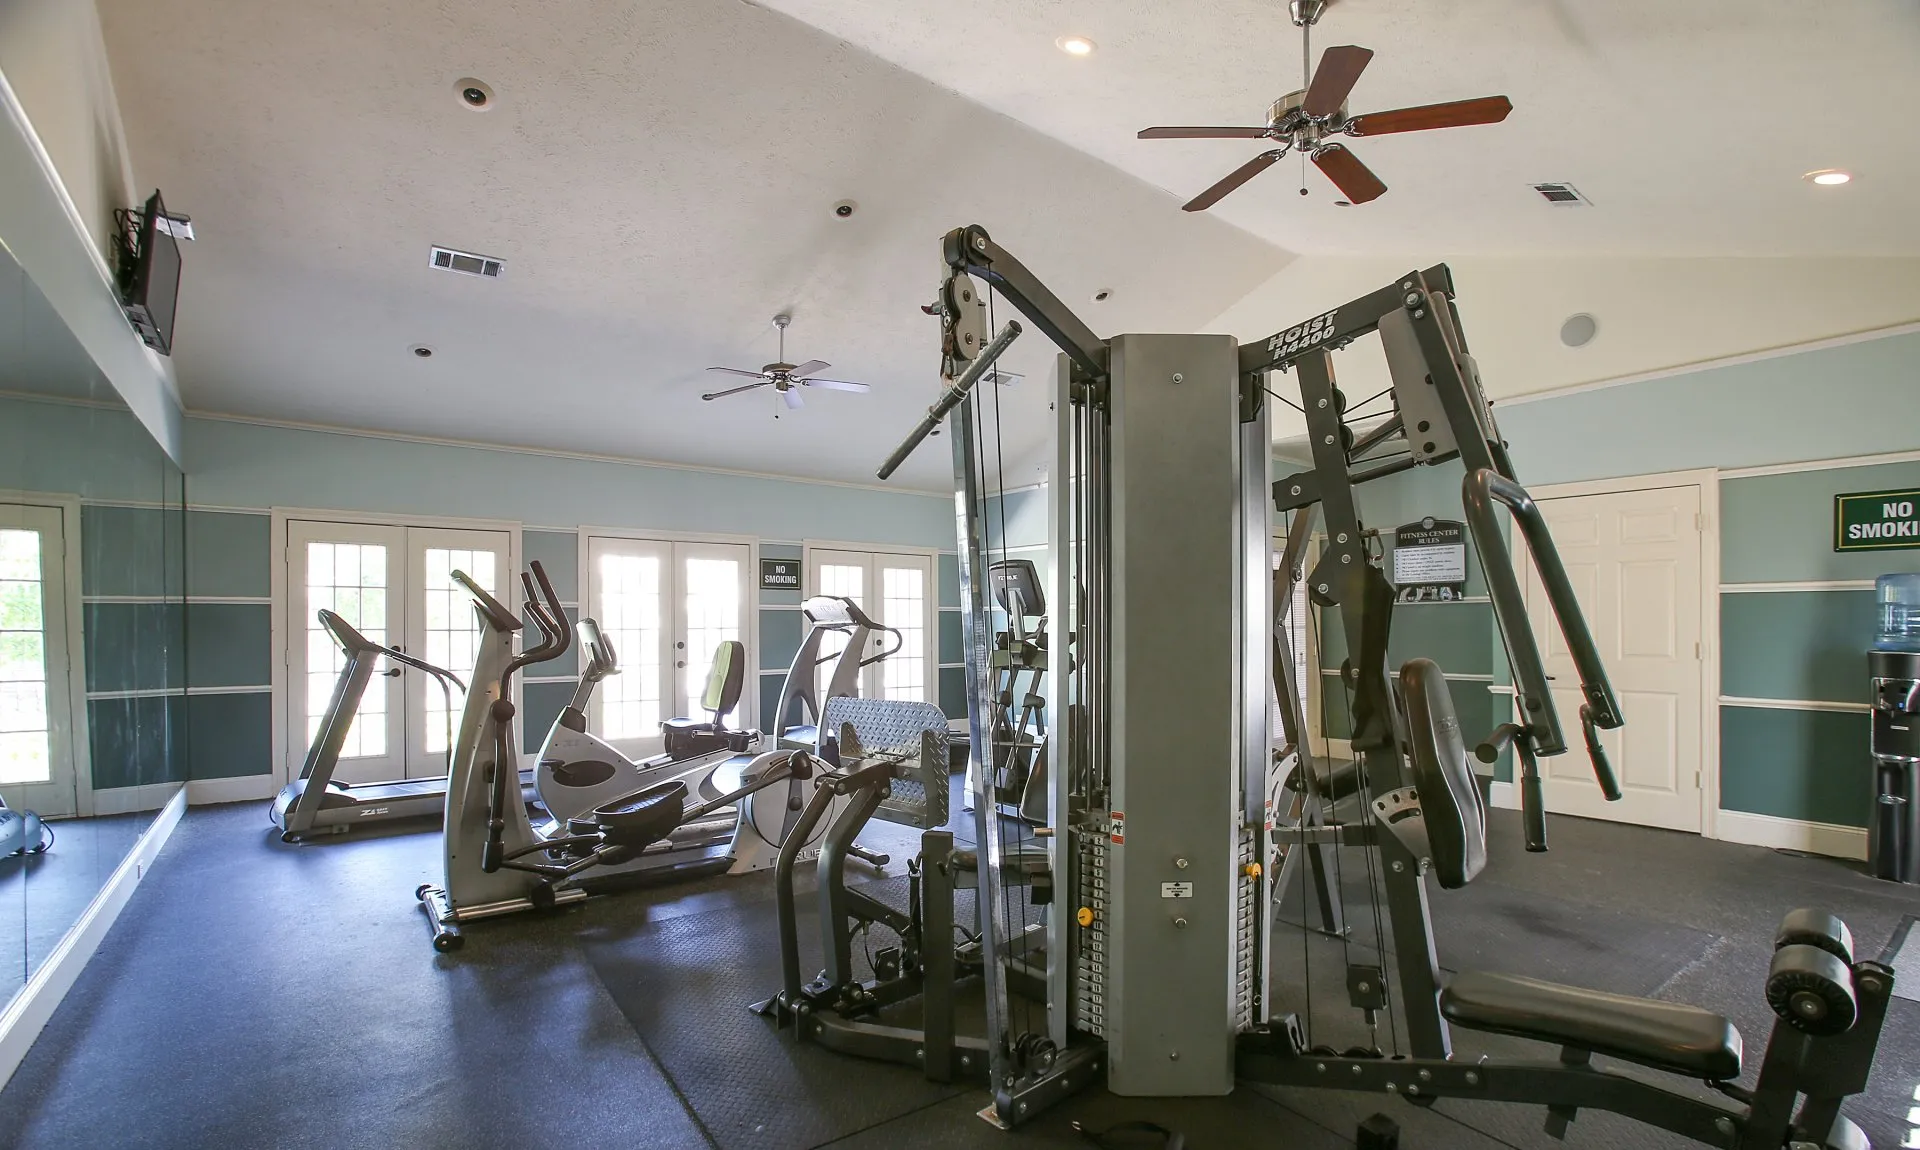 Apartment fitness center.